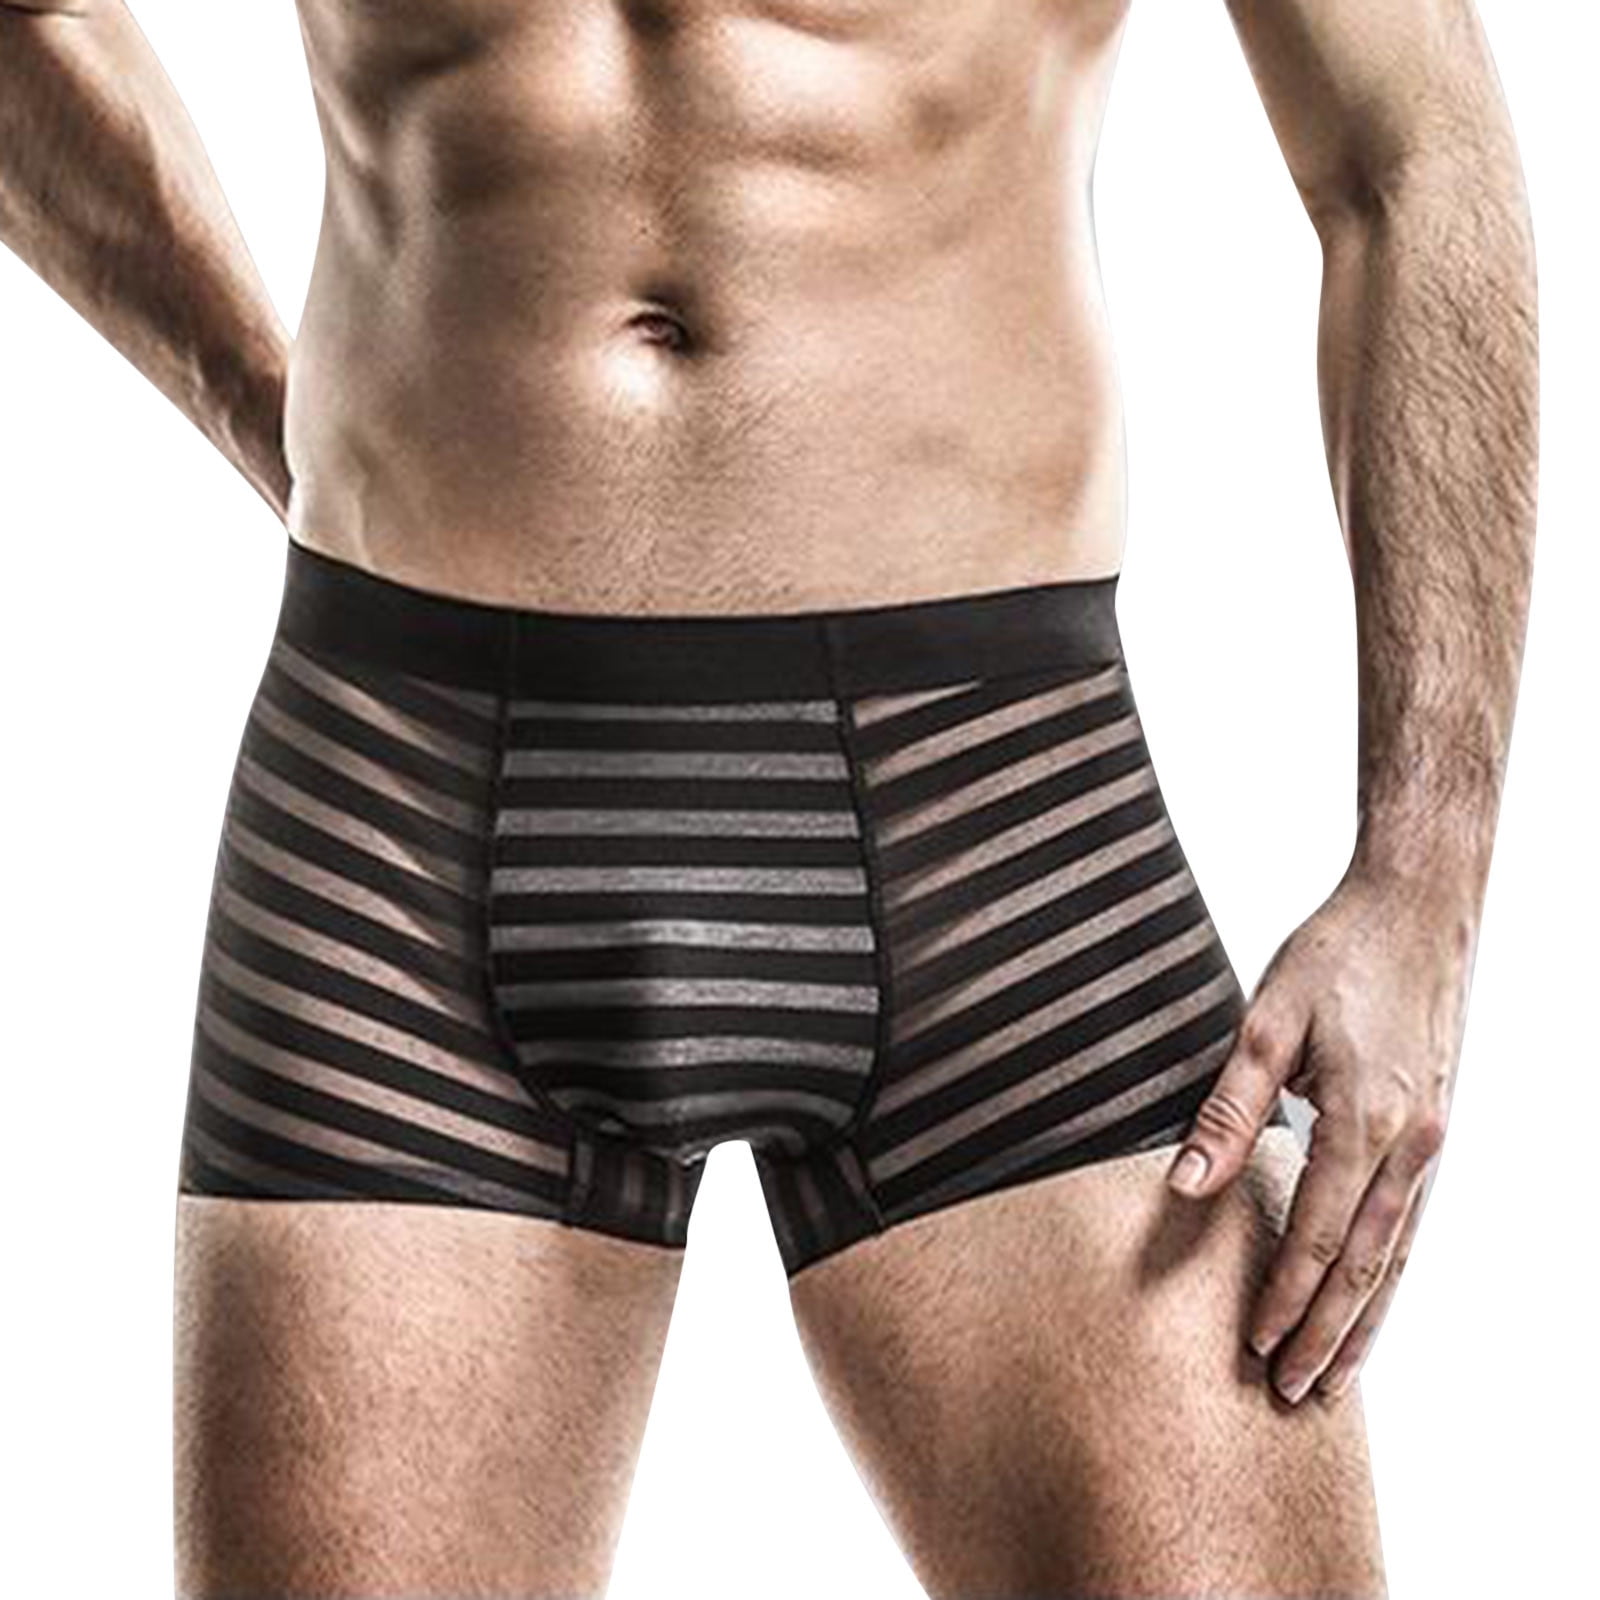 Pimfylm Cotton Underwear For Men Men's Underwear Classic Full Rise Brief C  X-Large 